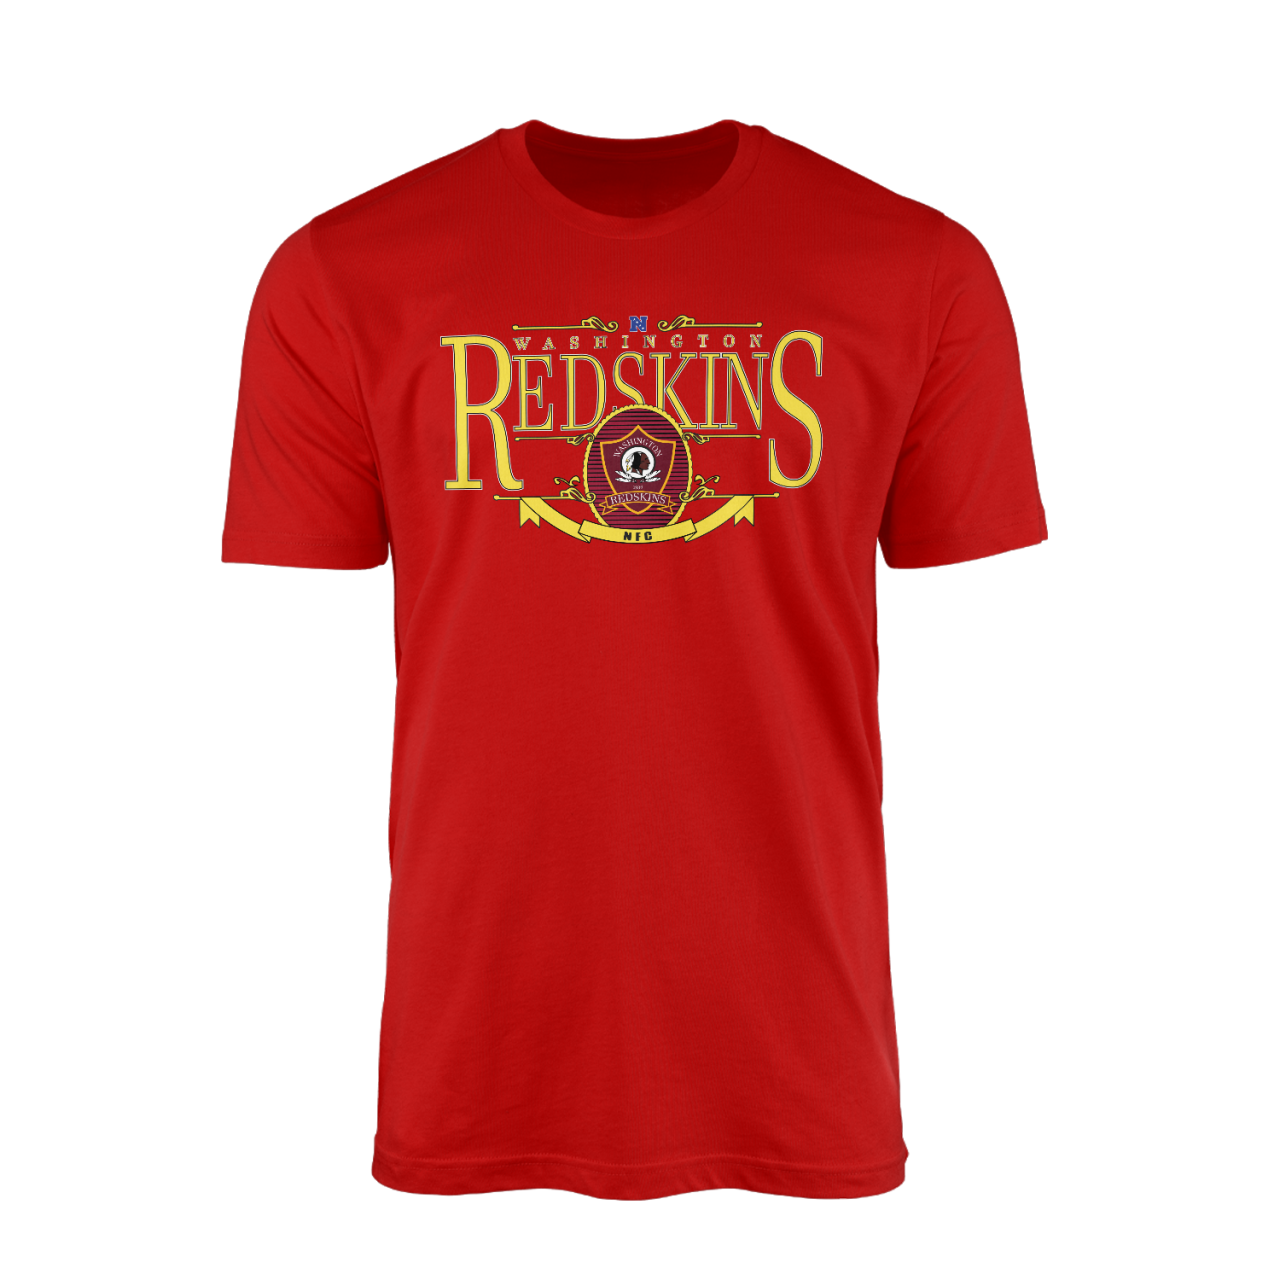 Redskins Retro Design Kırmızı Tshirt